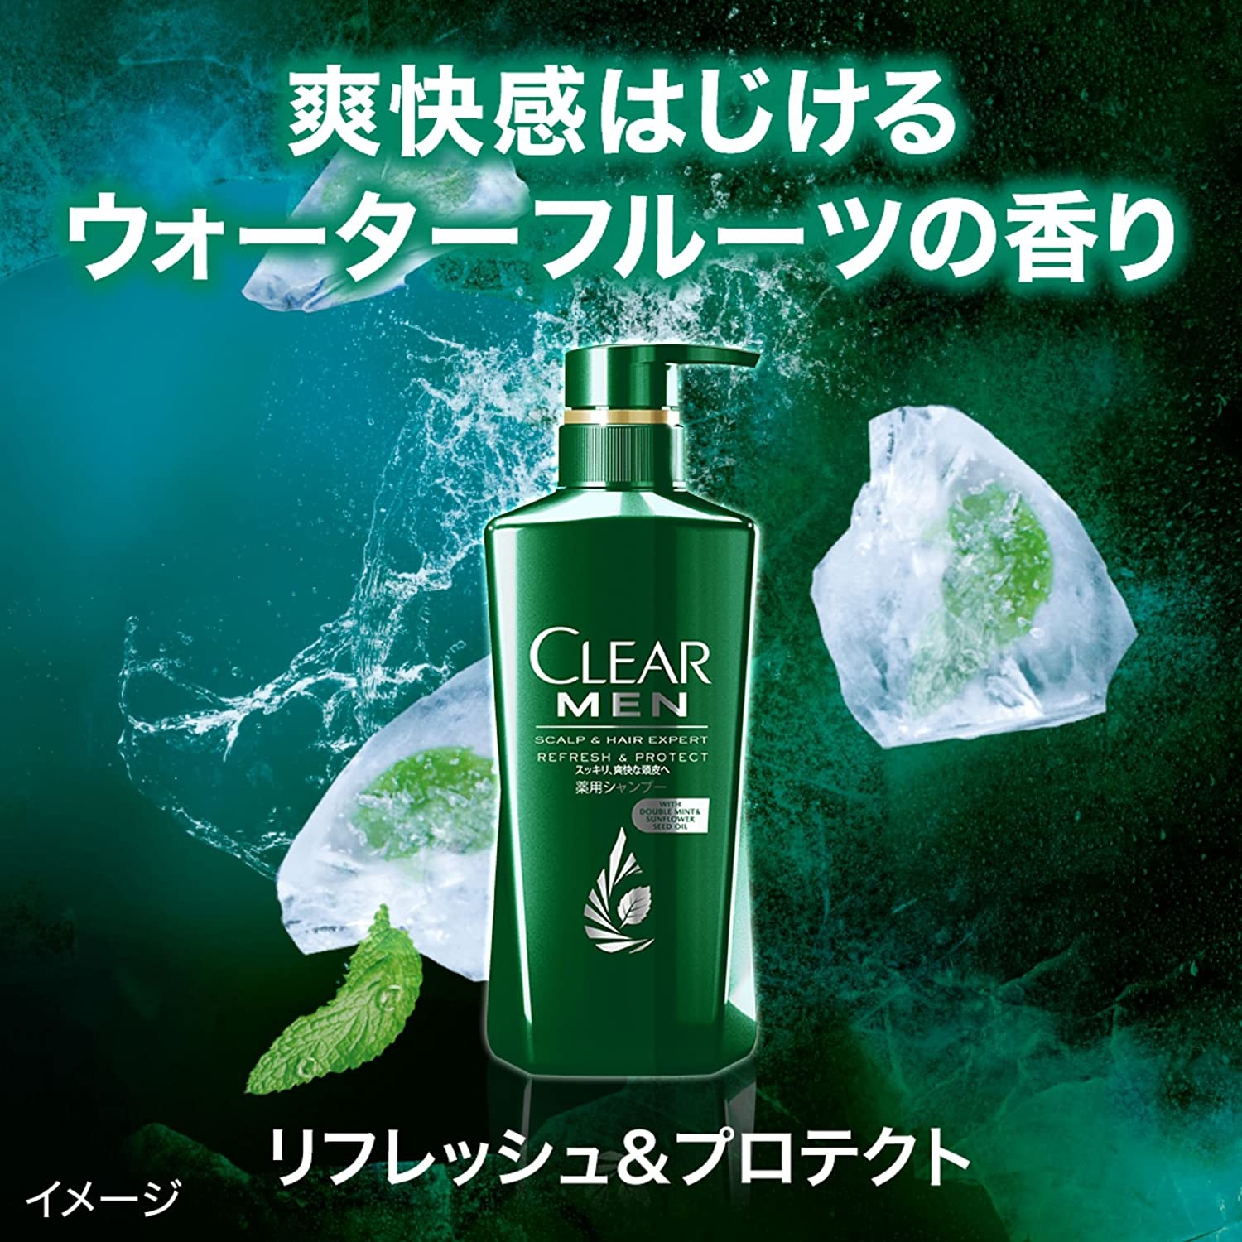 CLEAR for MEN(クリア フォー メン) リフレッシュ&プロテクト 薬用シャンプーの商品画像7 